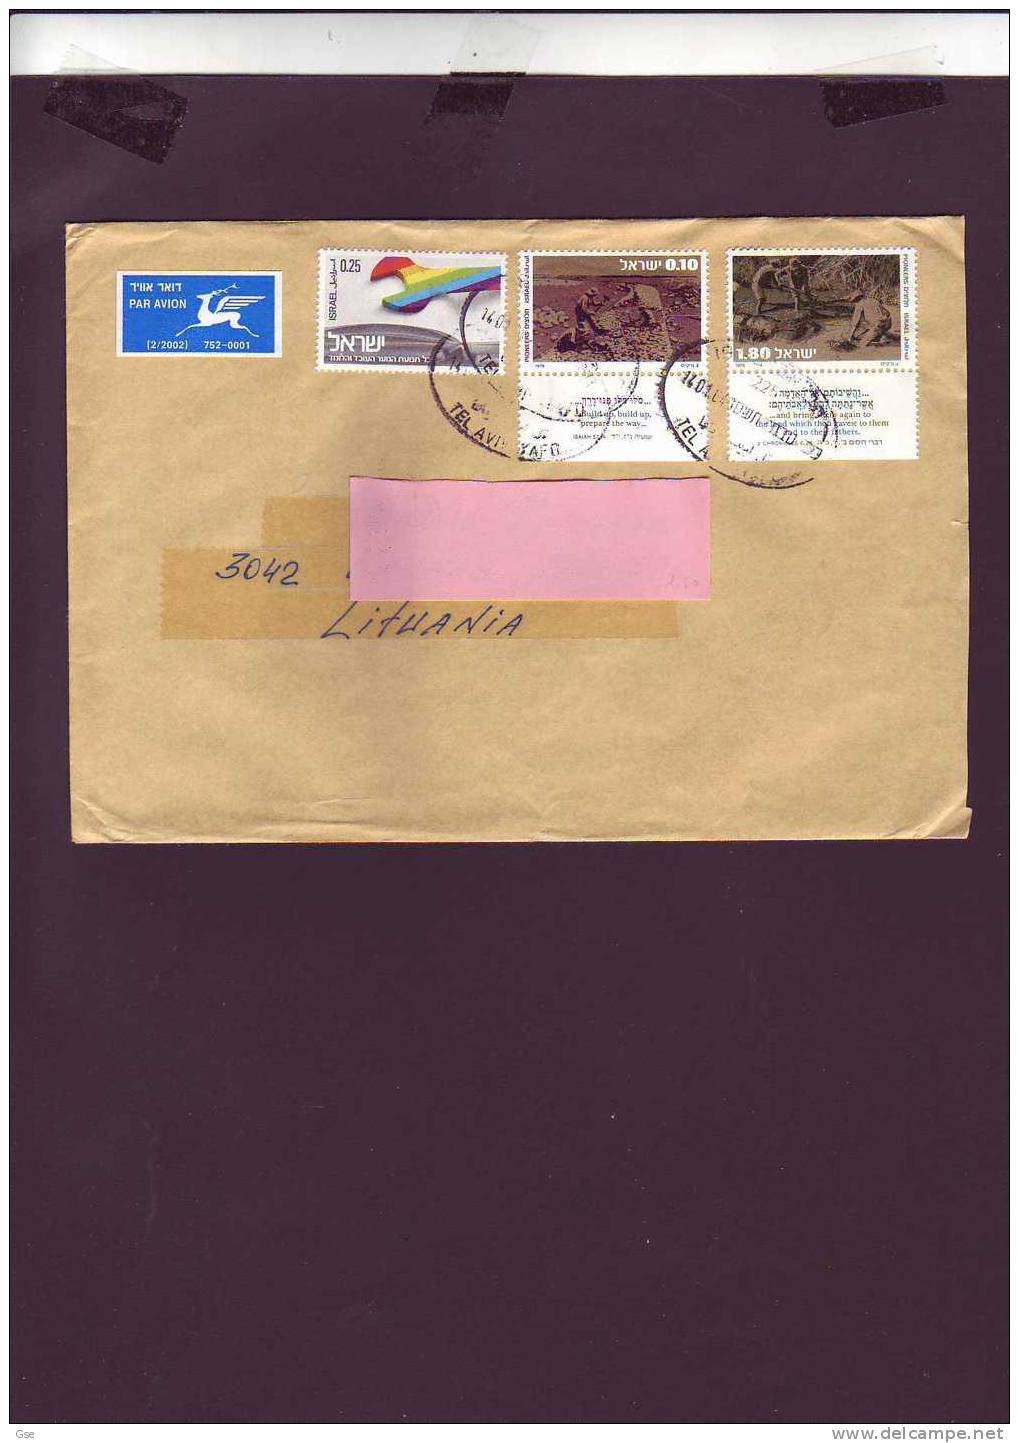 ISRAELE  2004 - Raccomandata  Per La Lituania - Briefe U. Dokumente